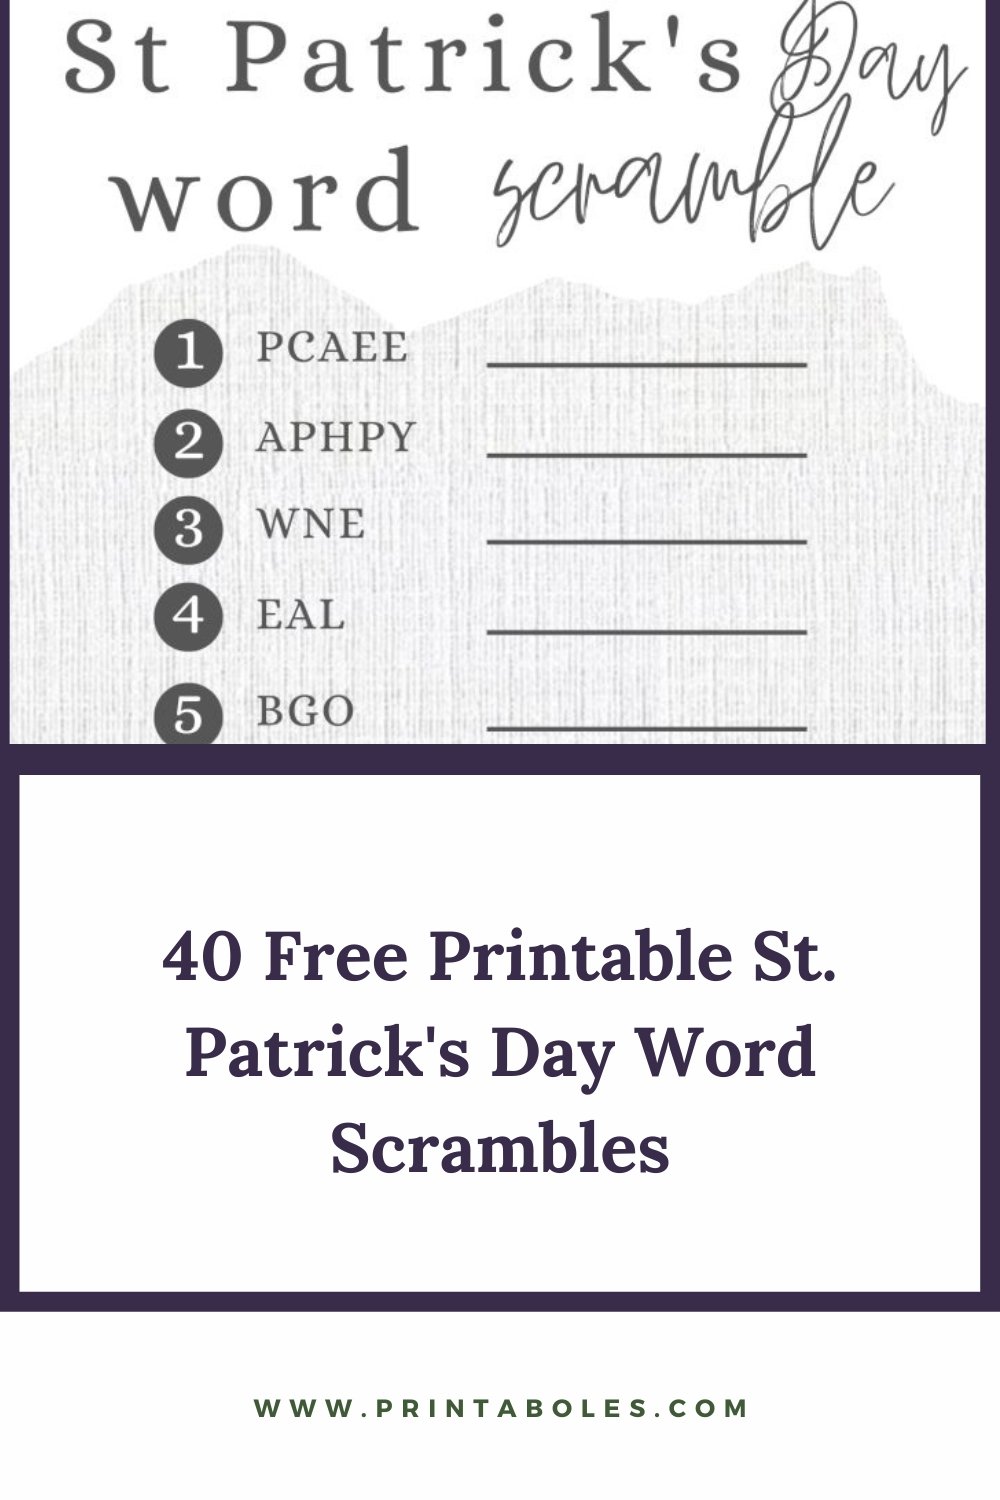 40 Free Printable St. Patrick's Day Word Scrambles